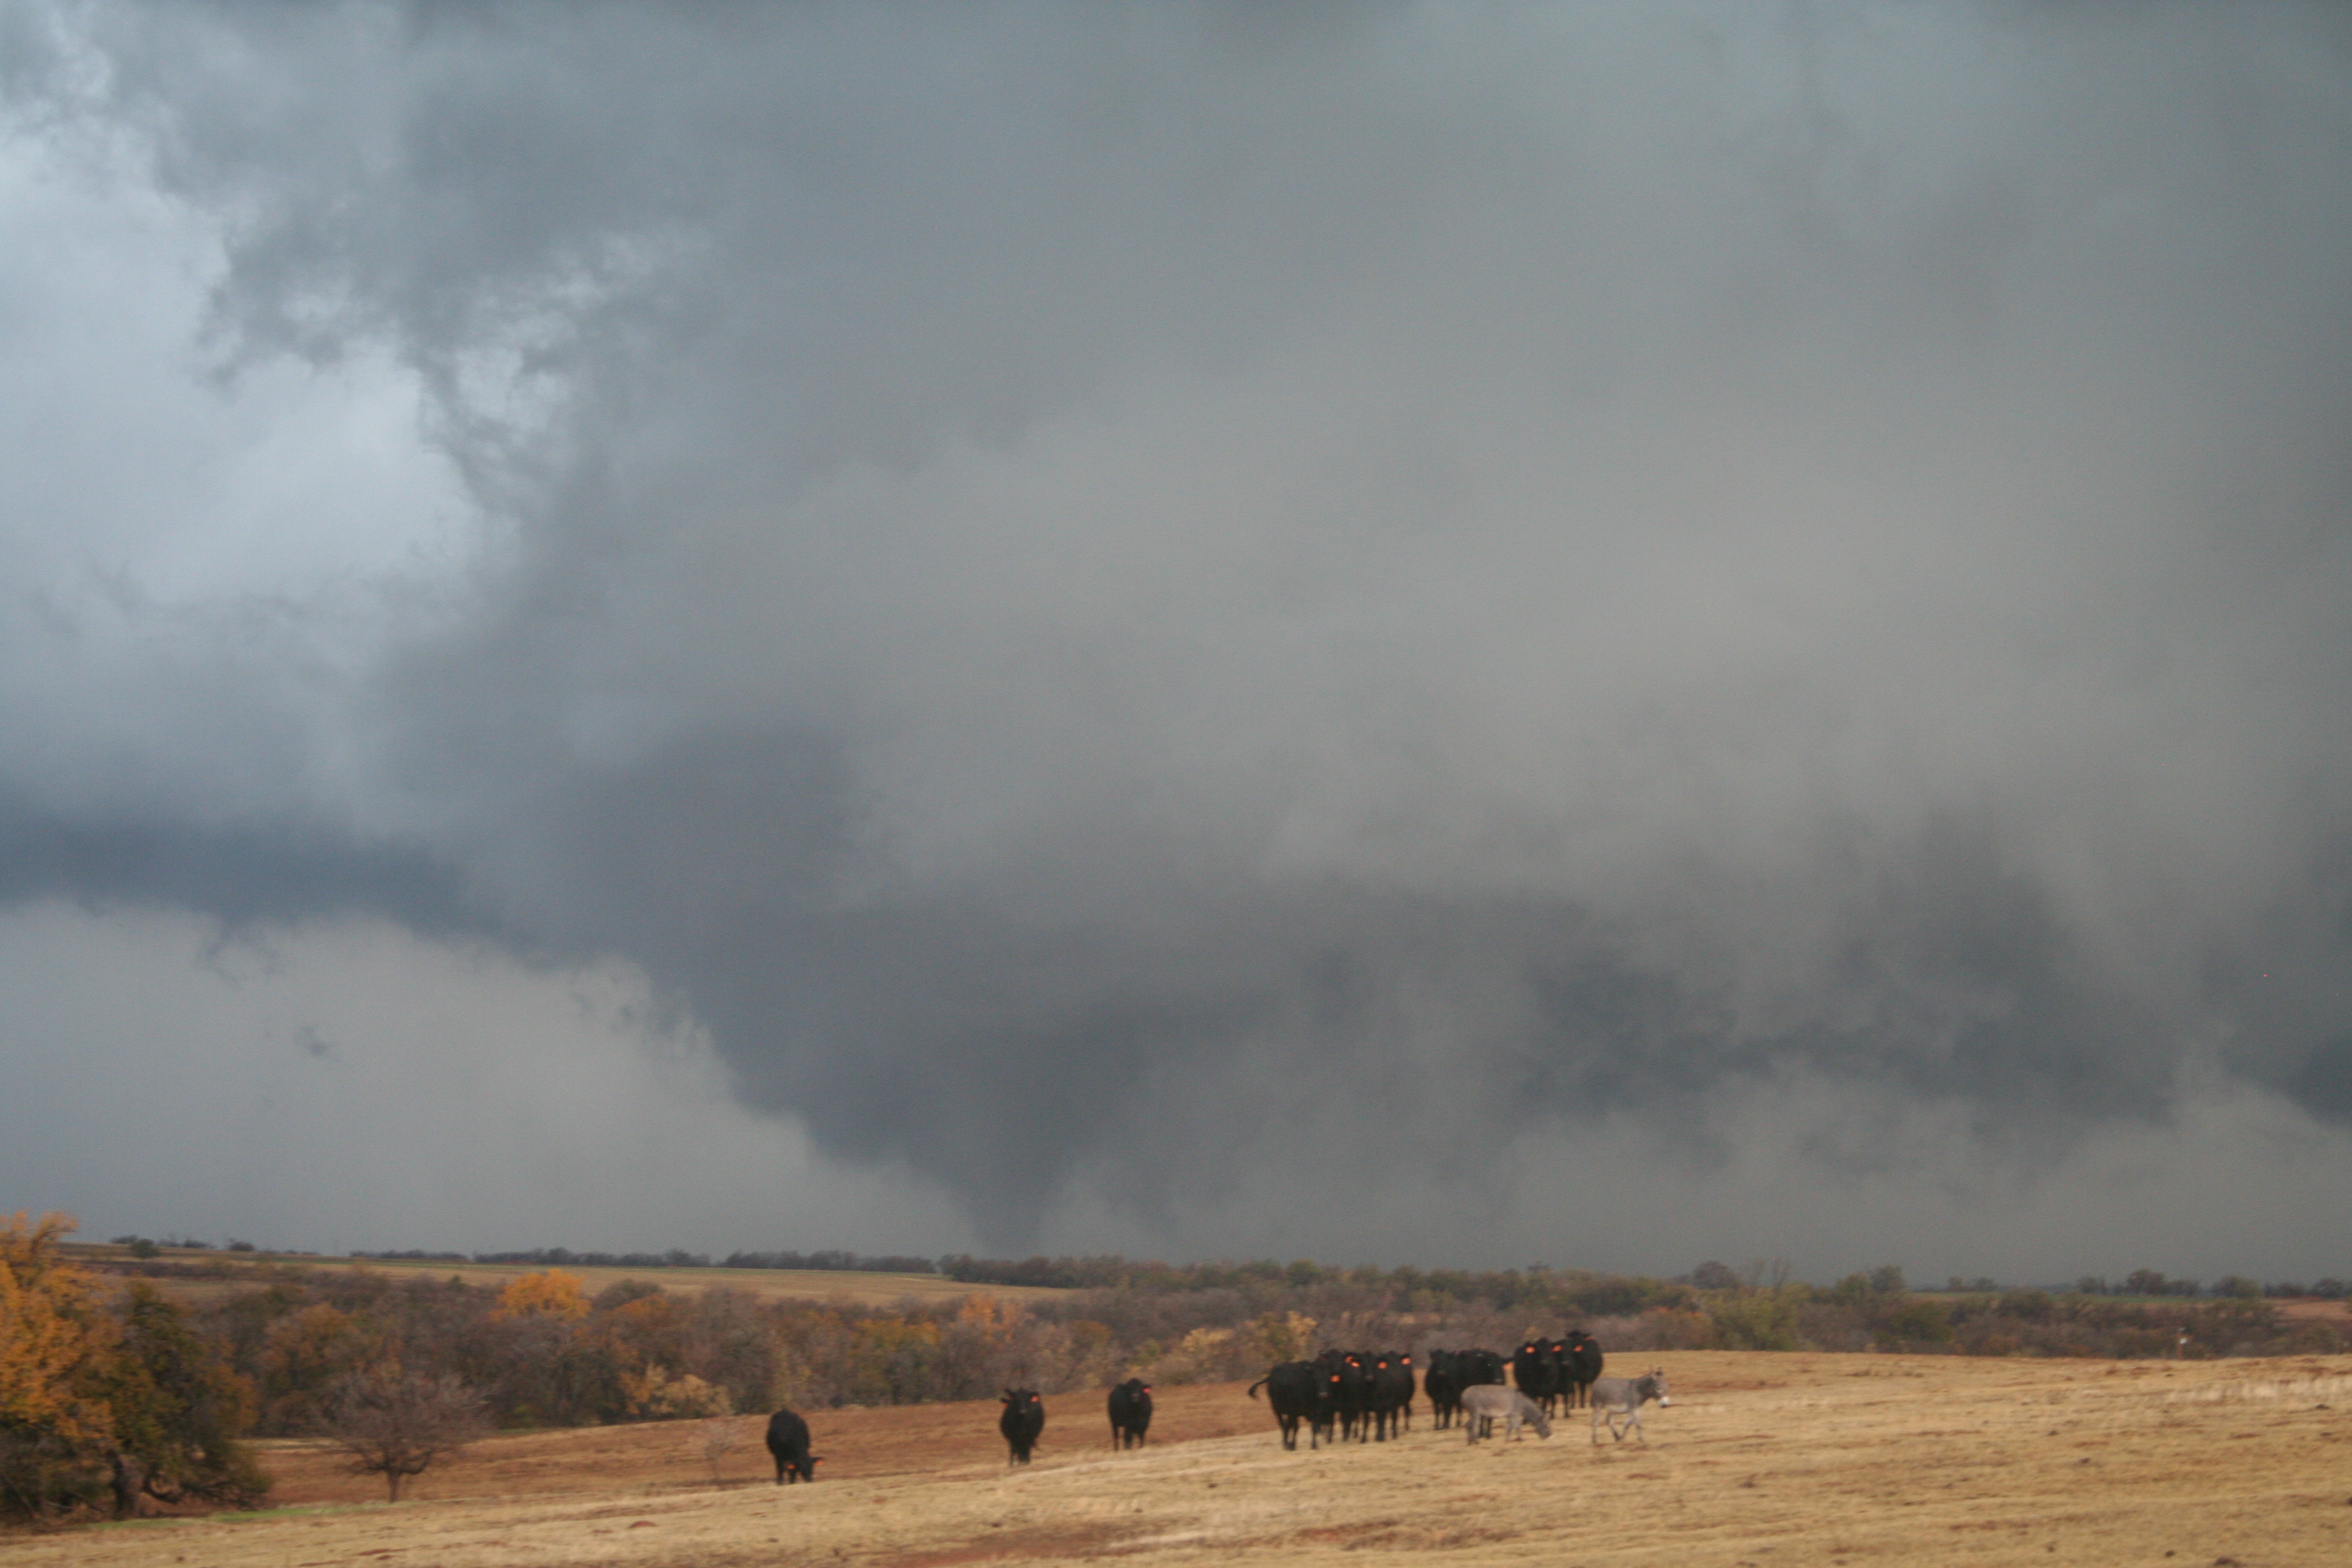 Tornado near Fort Cobb, OK on November 7, 2011